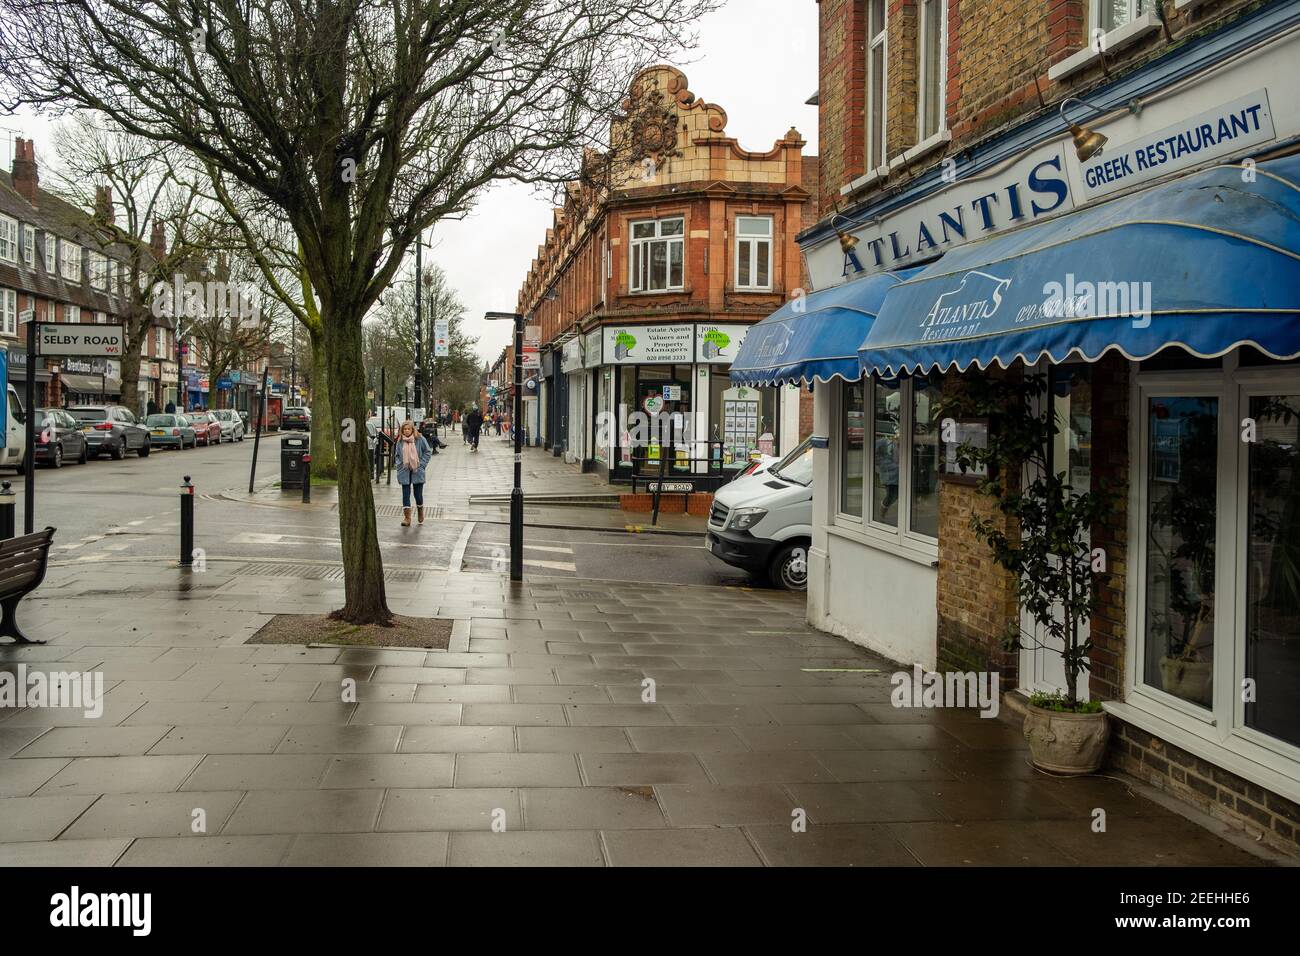 Londra - Febbraio 2021: Pitshanger Lane, una strada suburbana di negozi e case a Ealing, Londra ovest Foto Stock